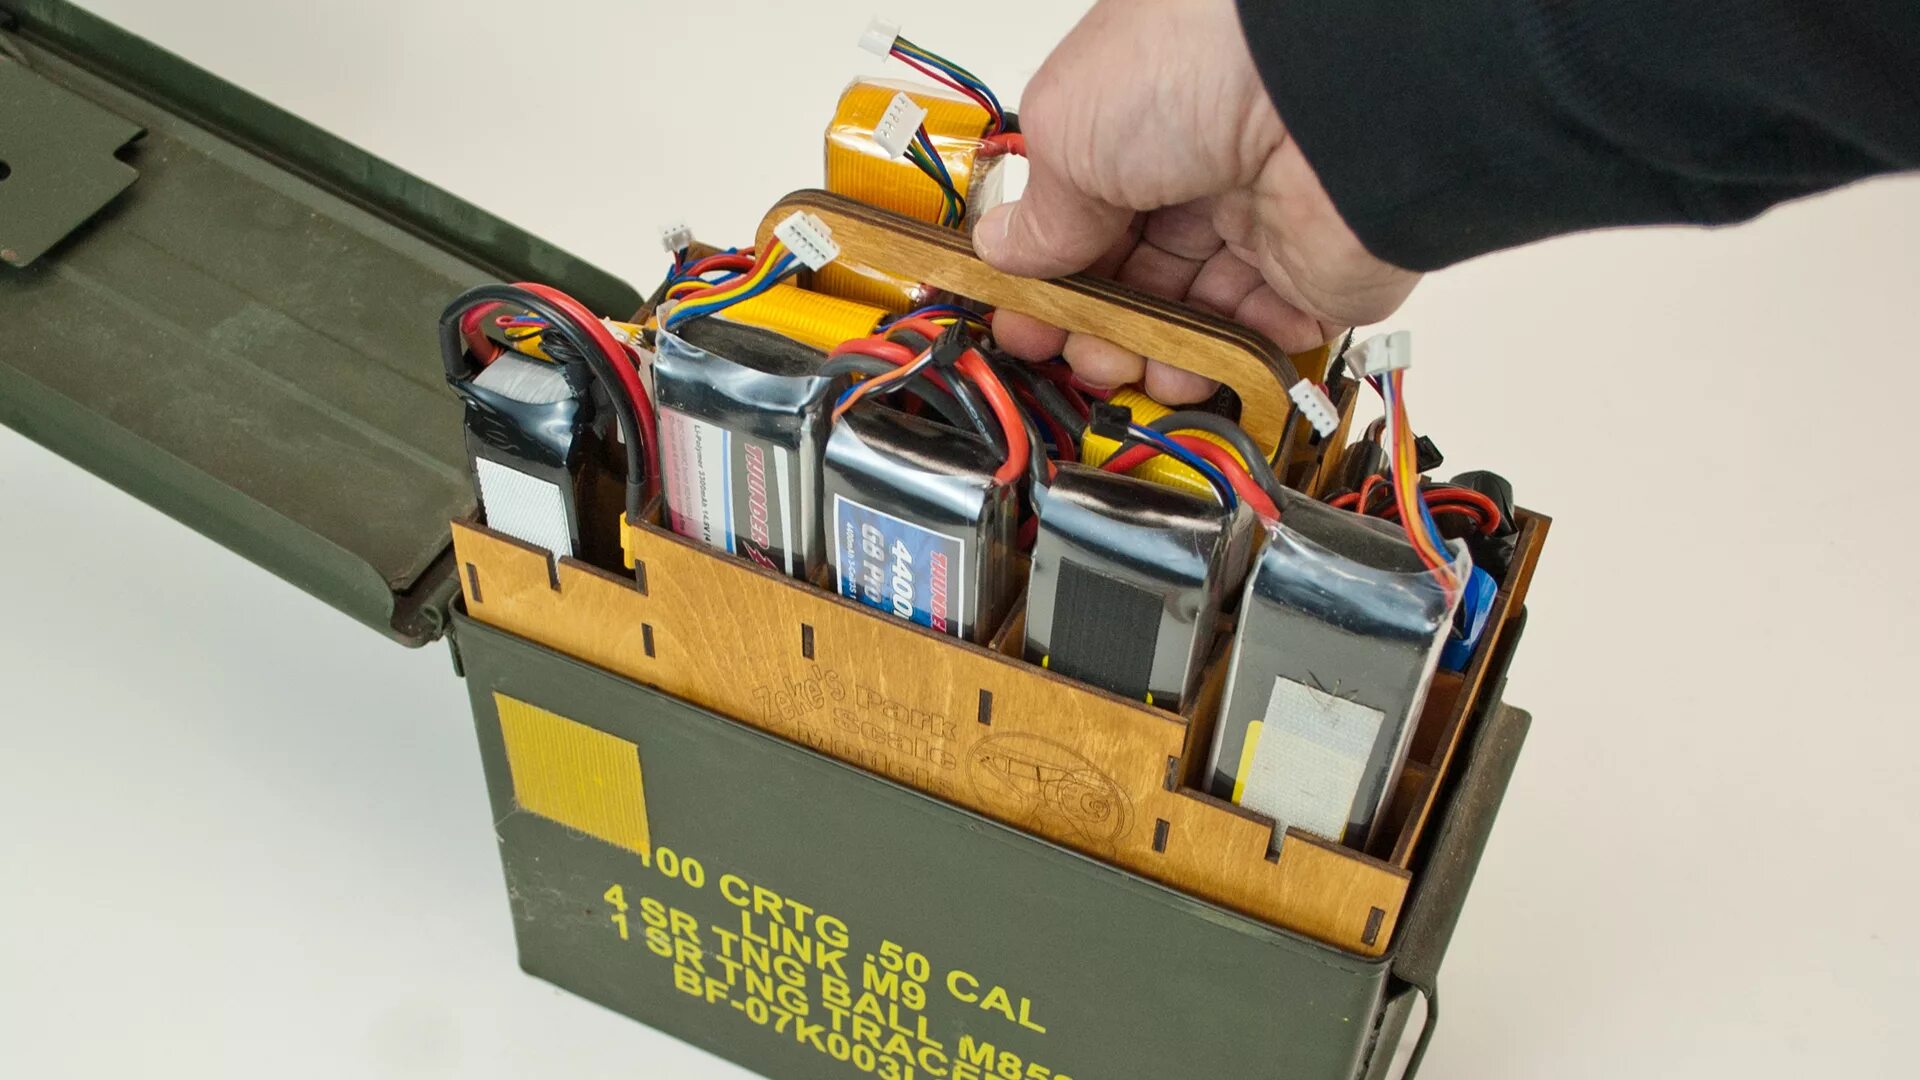 Storage batteries. Ящик для Липо батарей. Ящик для зарядки аккумуляторов li-po. Ящик для зарядки аккумуляторов Lipo. Полимеры в аккумуляторах.